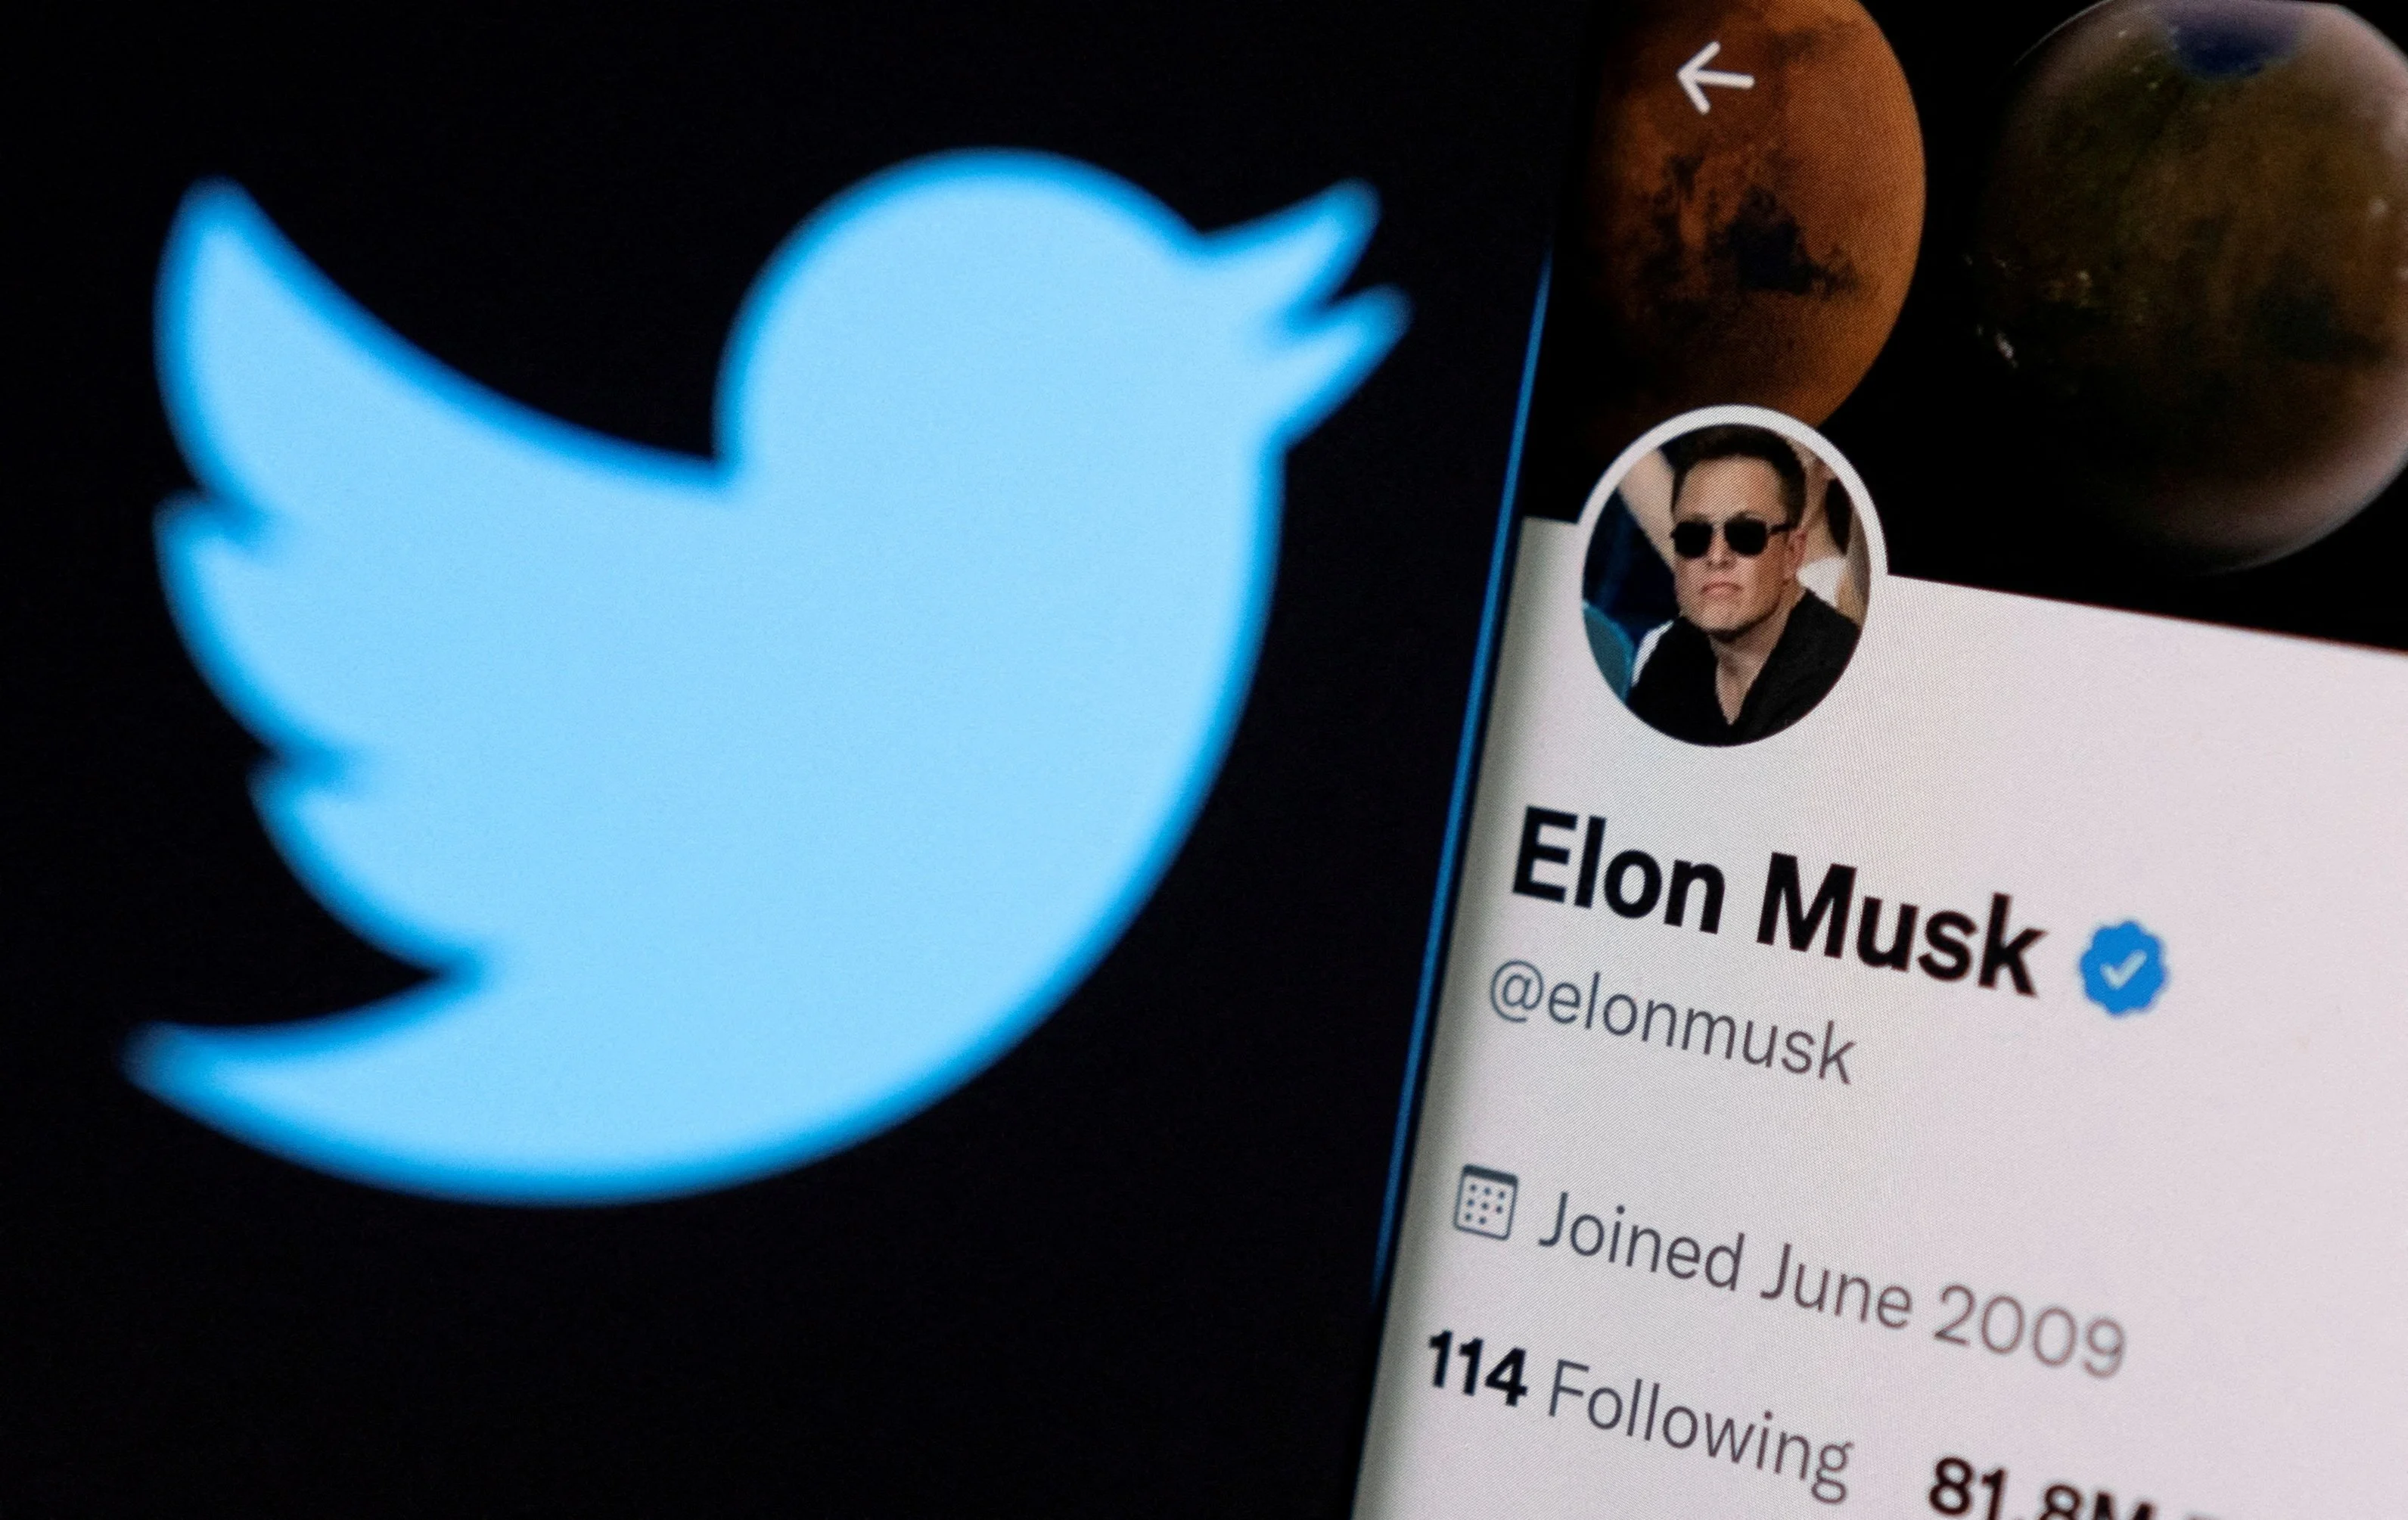 Elon Musk to Acquire Twitter in $44 Billion Deal